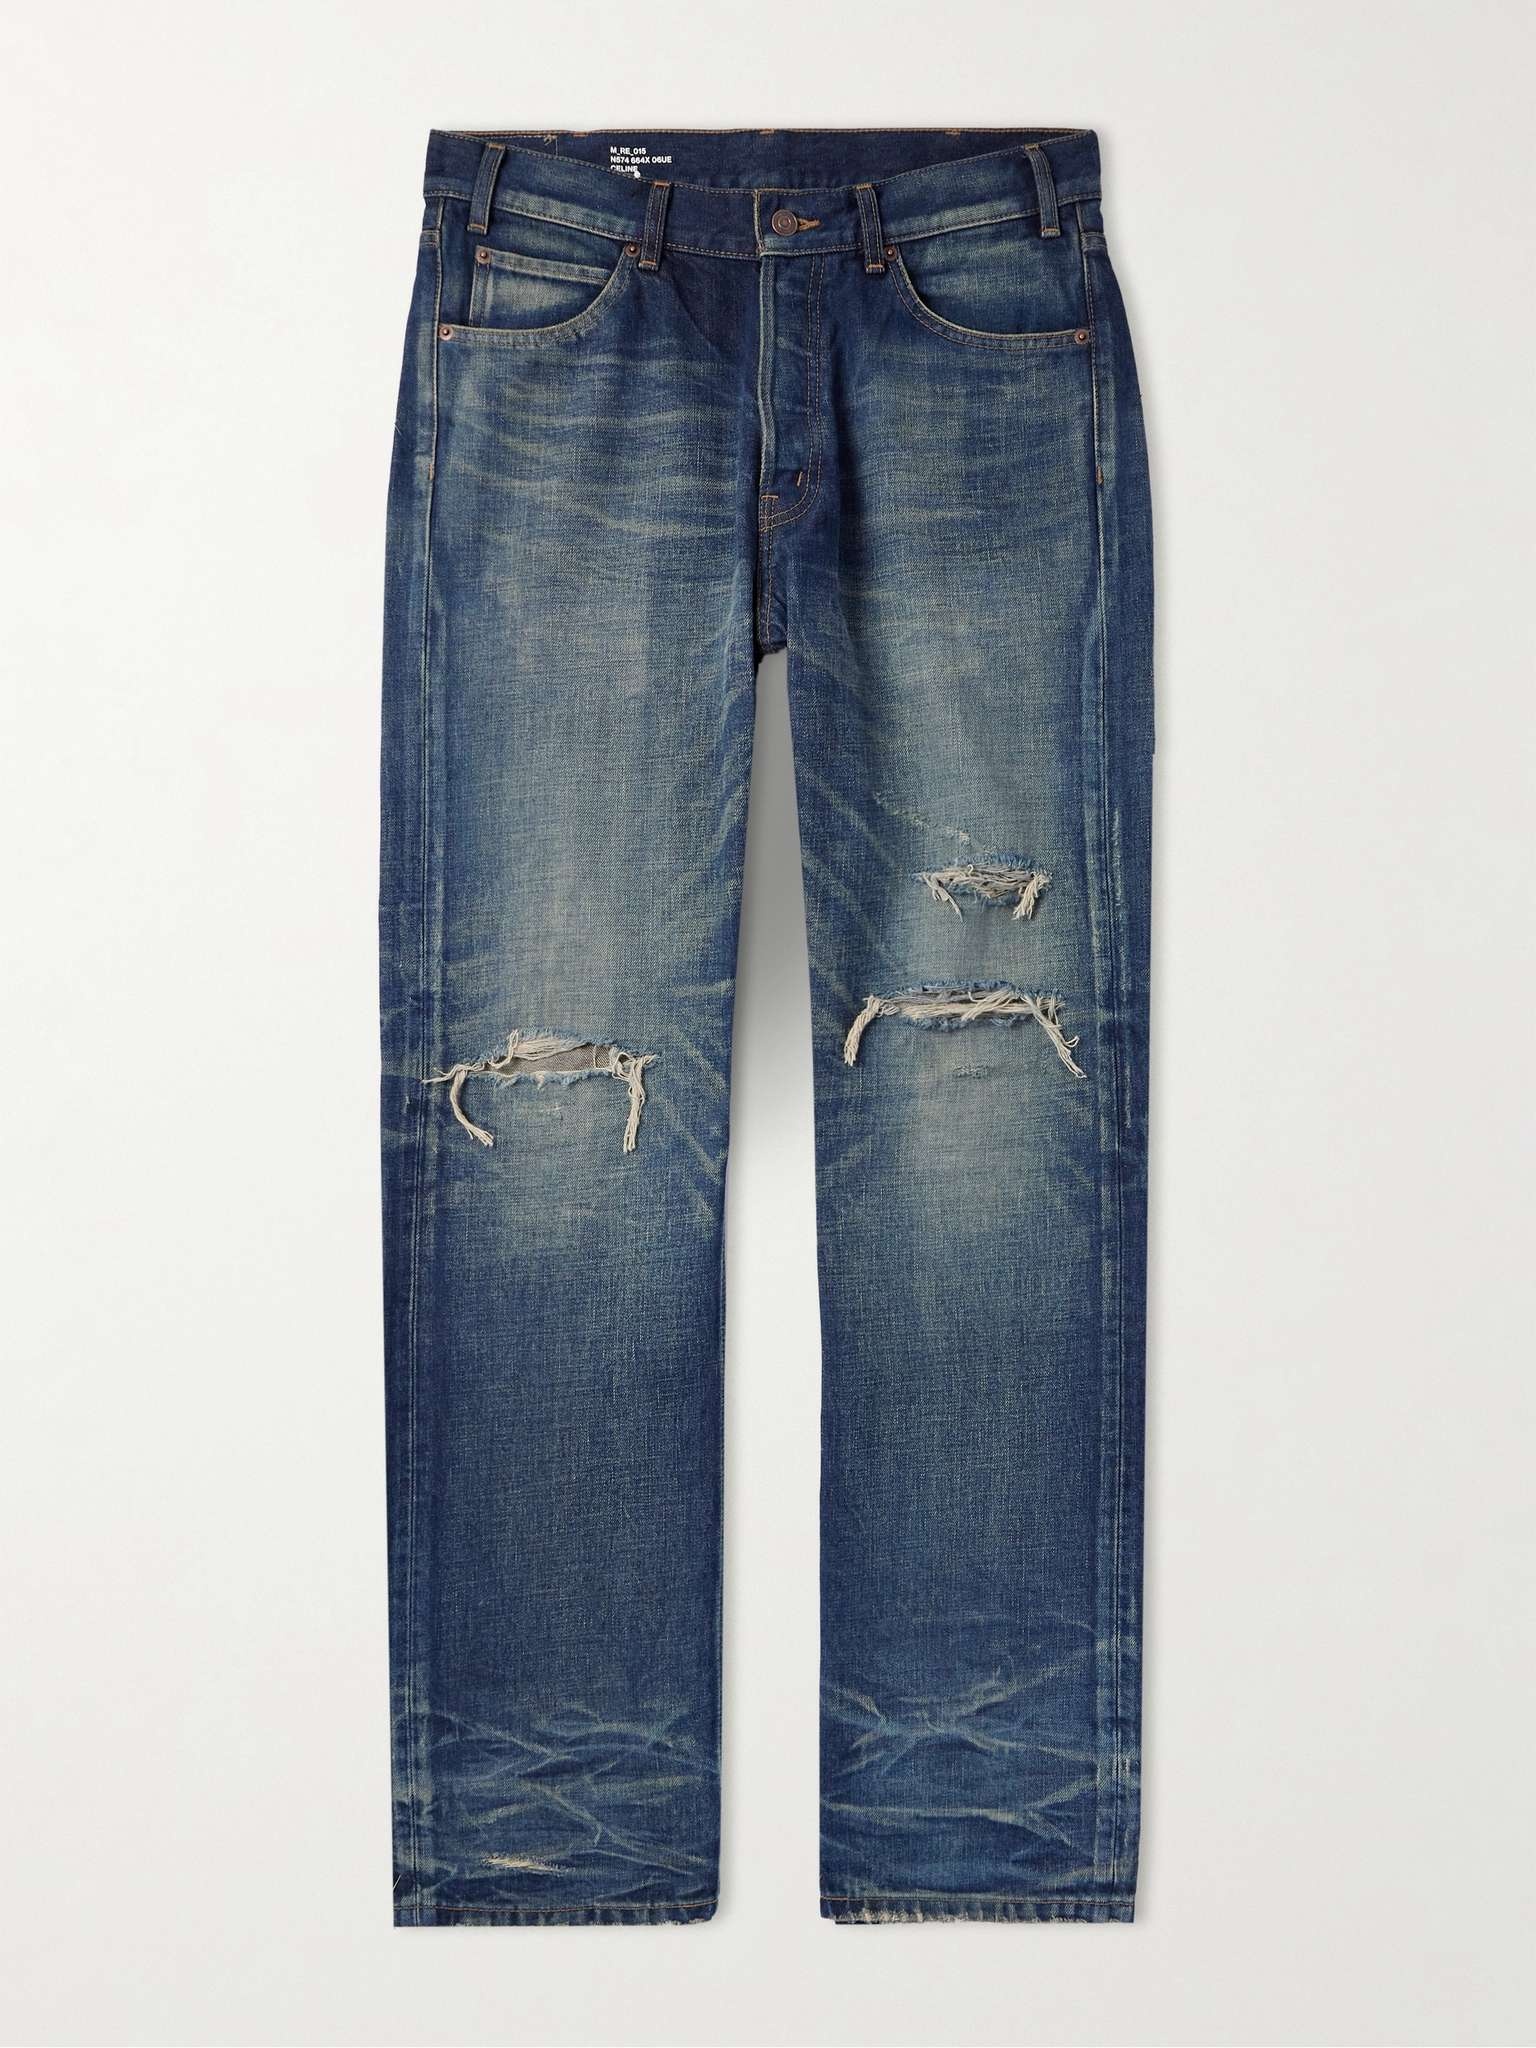 Kurt Straight-Leg Distressed Jeans - 1